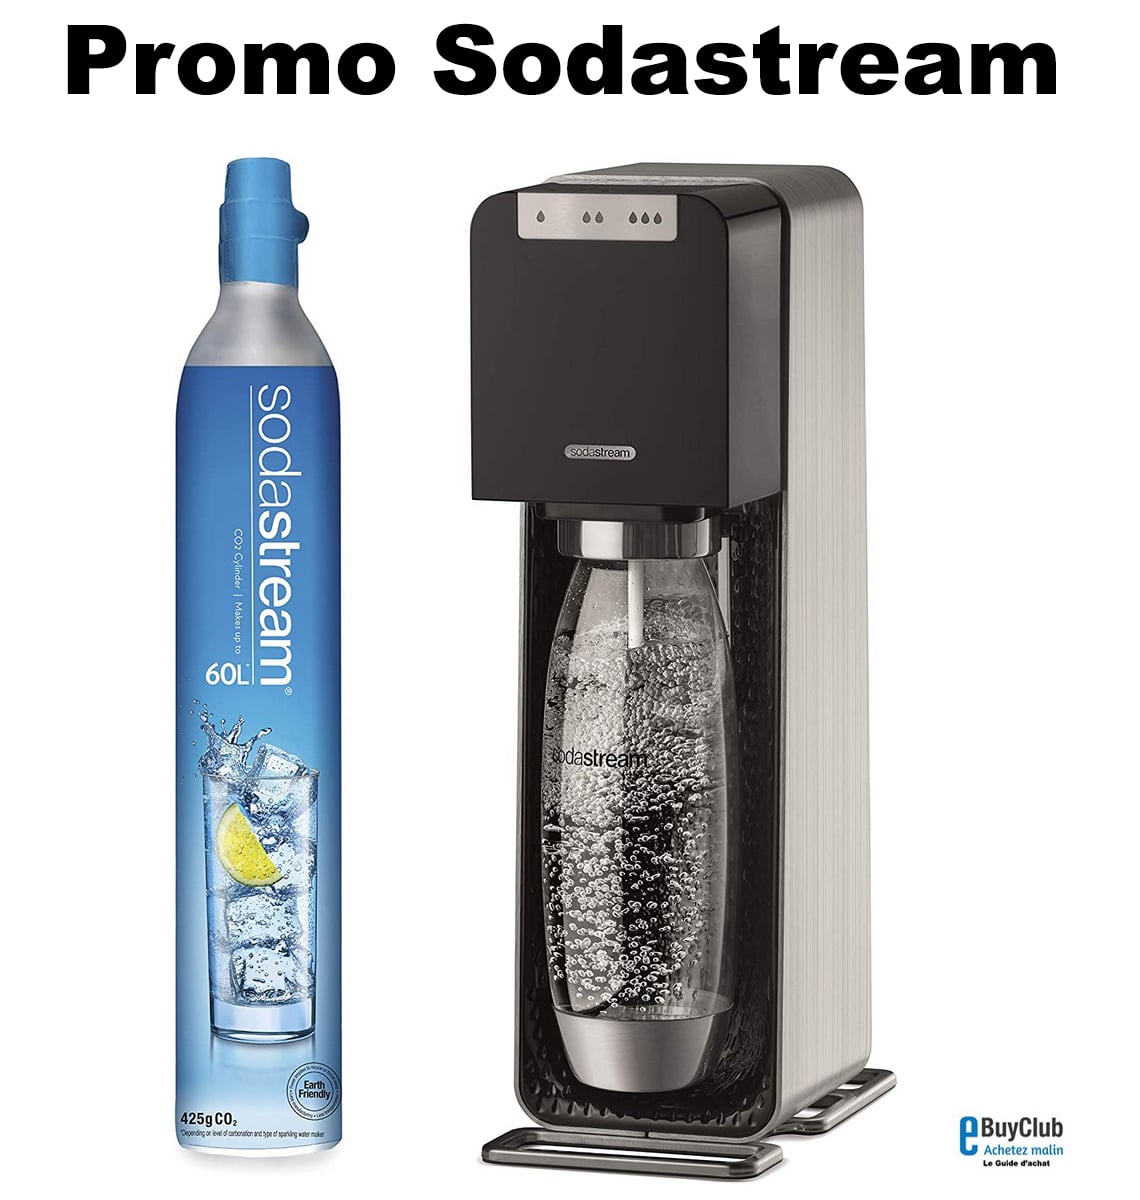 Promo Sodastream prix pas cher